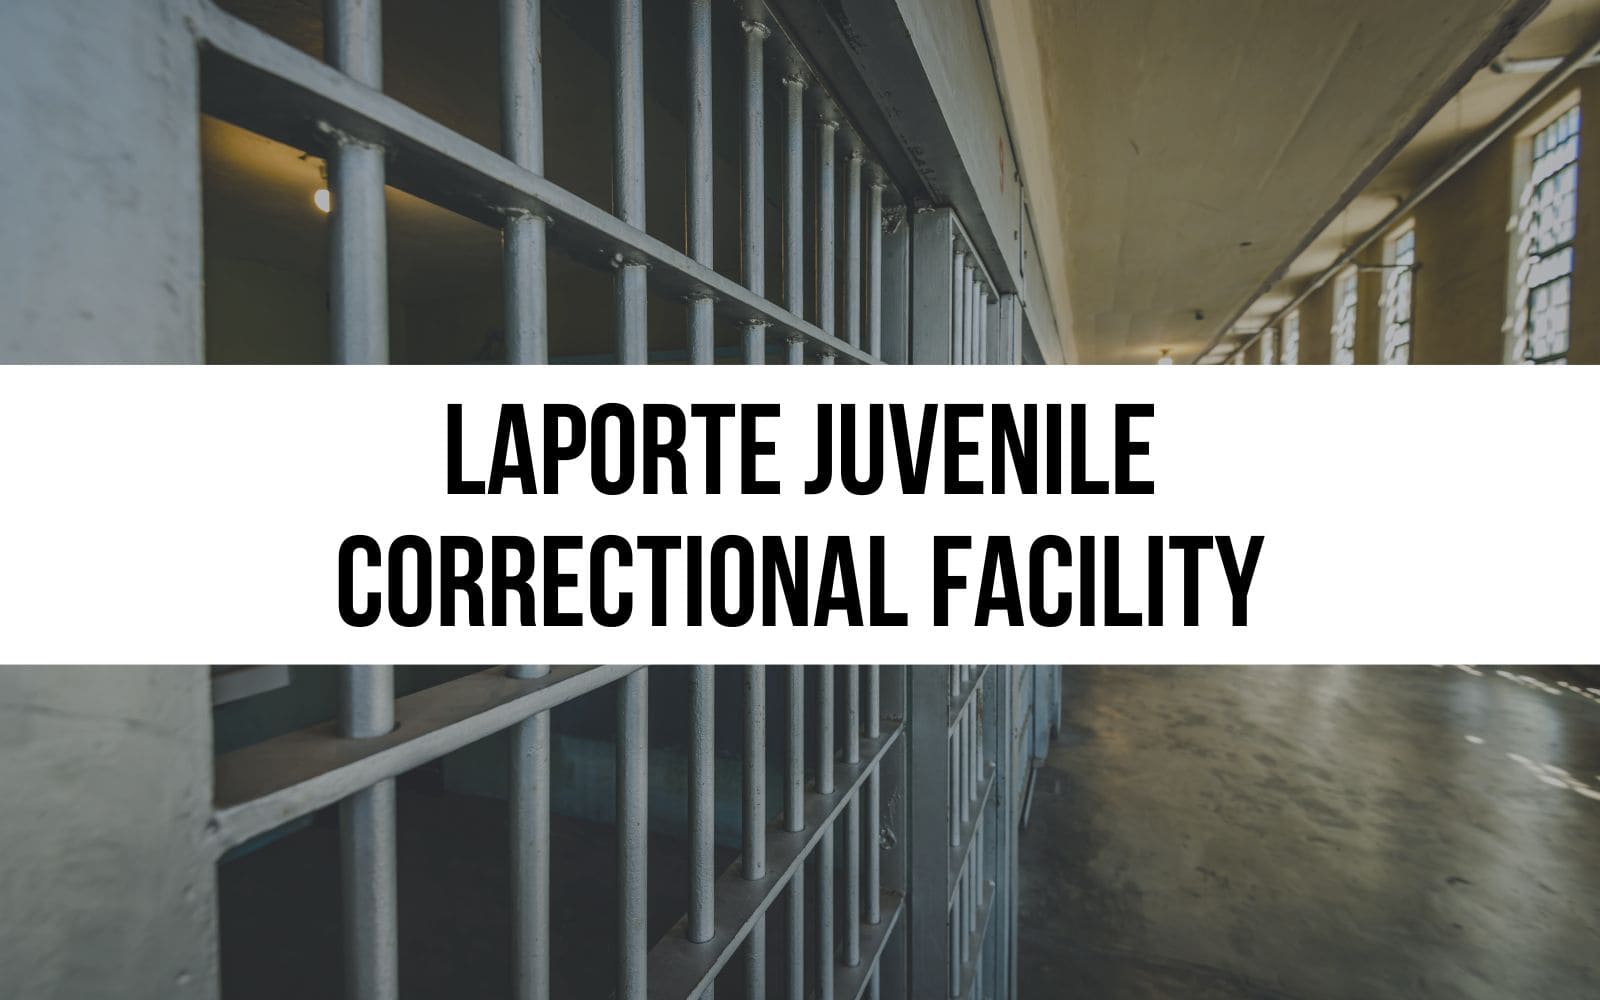 LaPorte Juvenile Correctional Facility